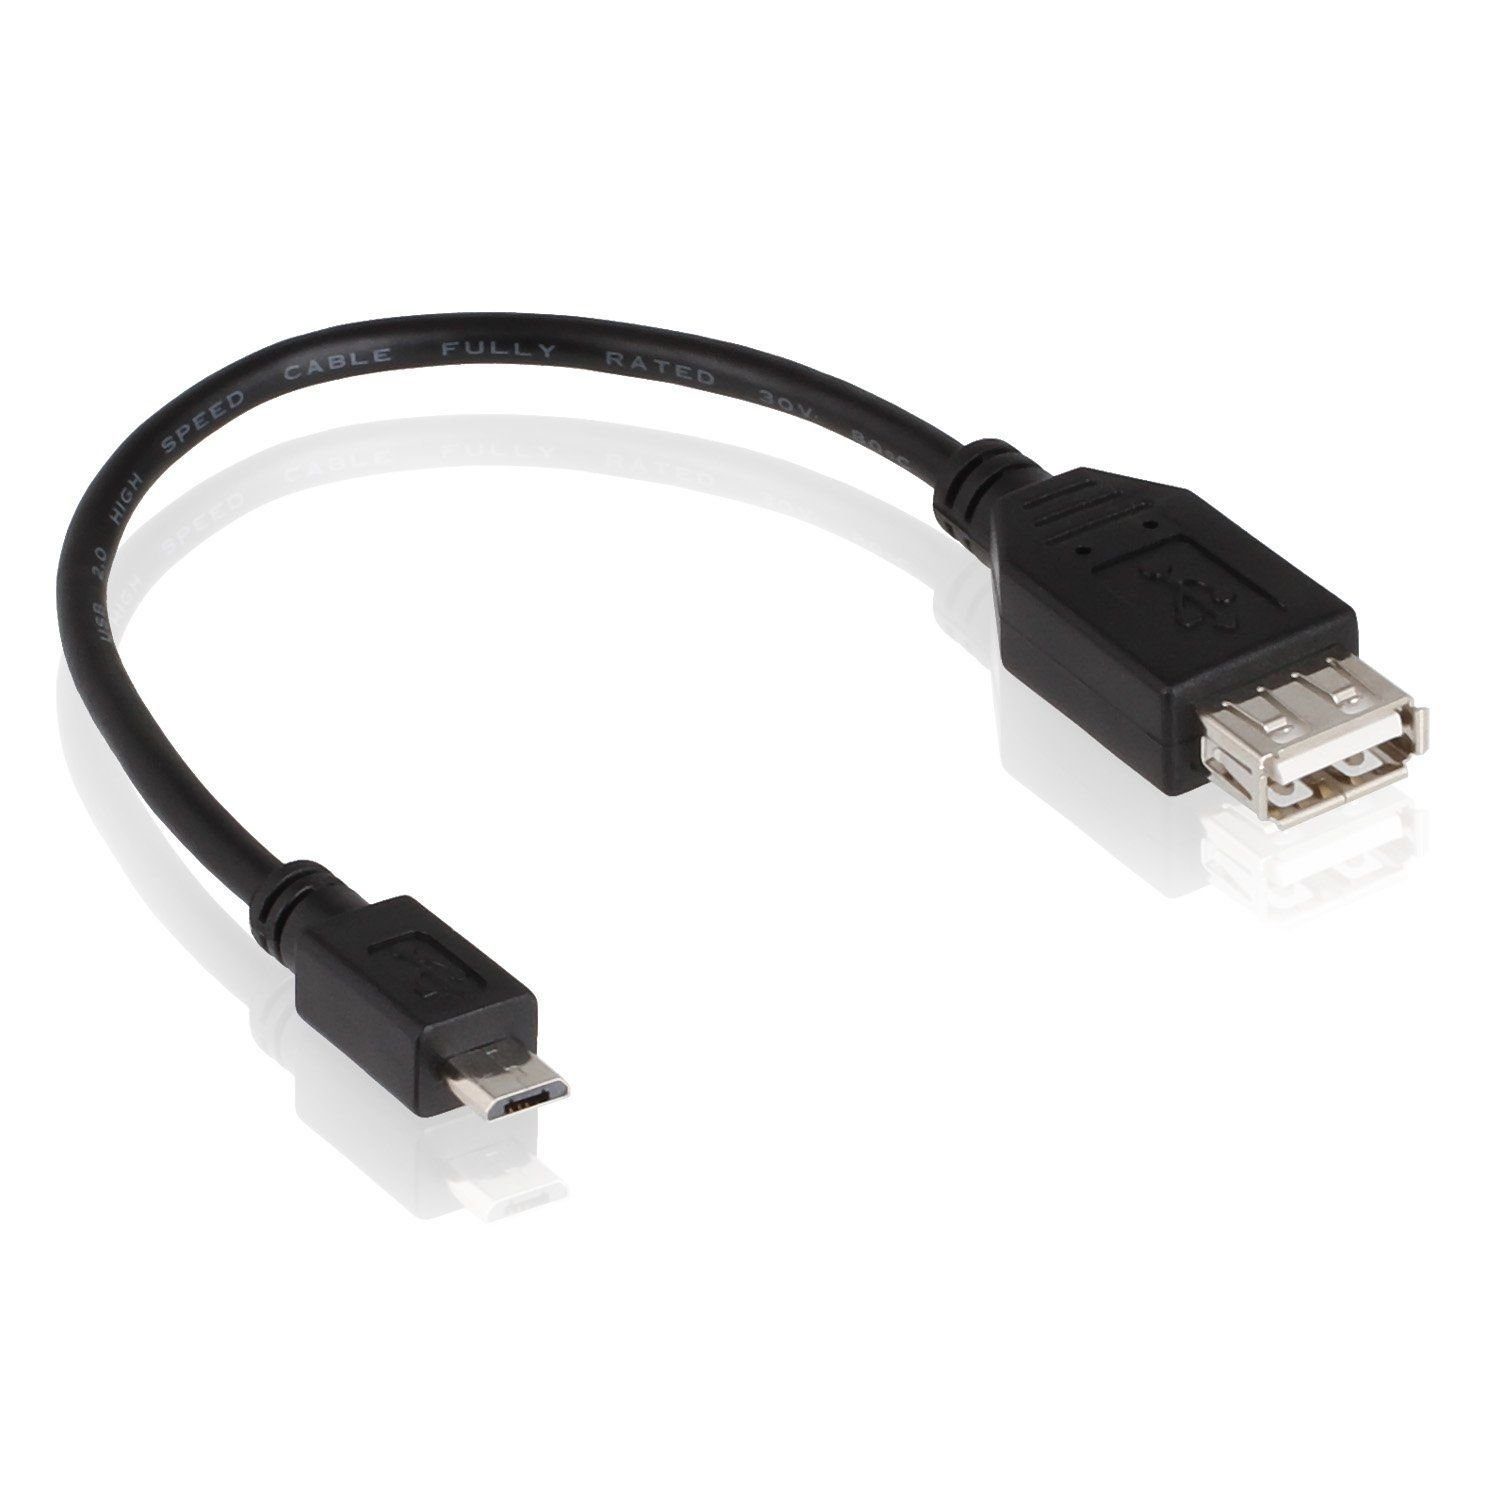 Wicked Chili »USB-A Adapter Kabel für microUSB OTG Handy & Table« USB- Adapter MicroUSB zu USB-A, 20 cm, Für OTG-fähige Smartphones / Tablets mit  microUSB Anschluss online kaufen | OTTO